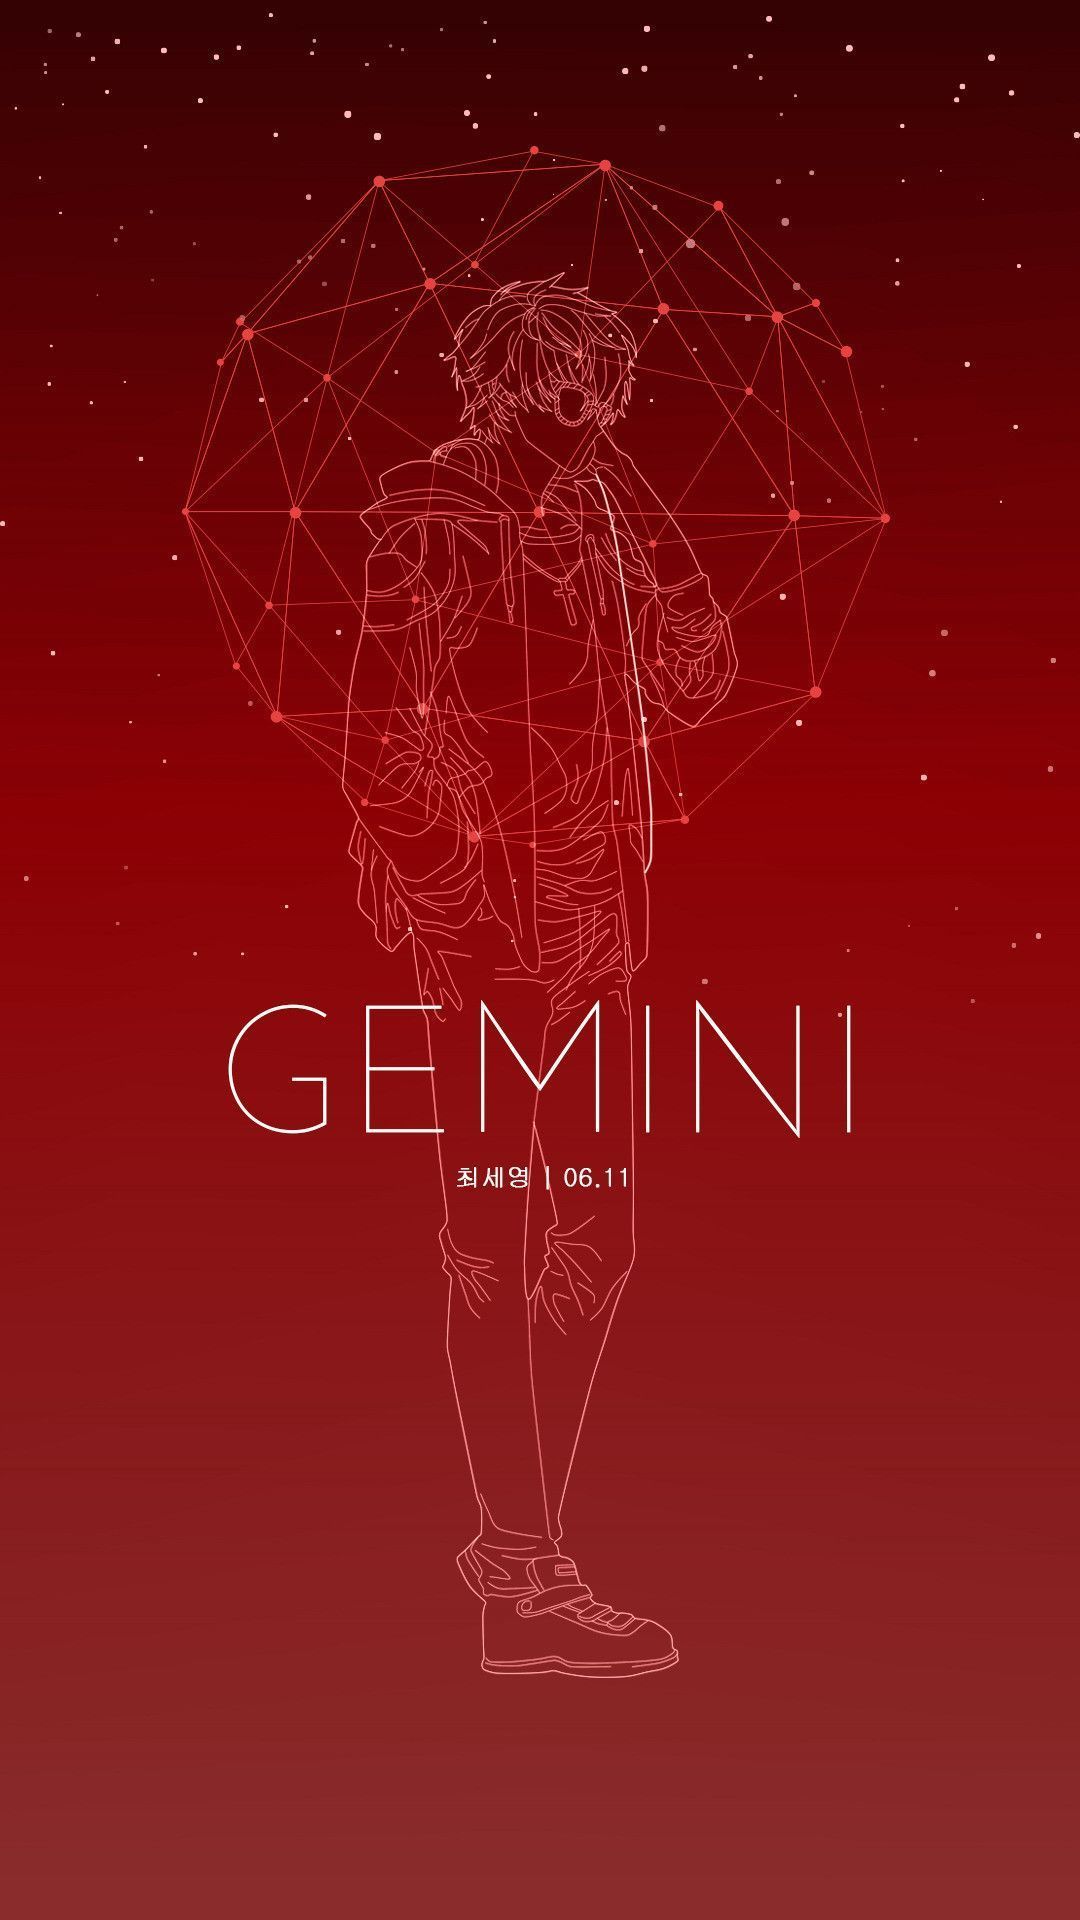 themooninajar “ horoscope gemini, pt. 2 night on gemini aesthetic wallpapers